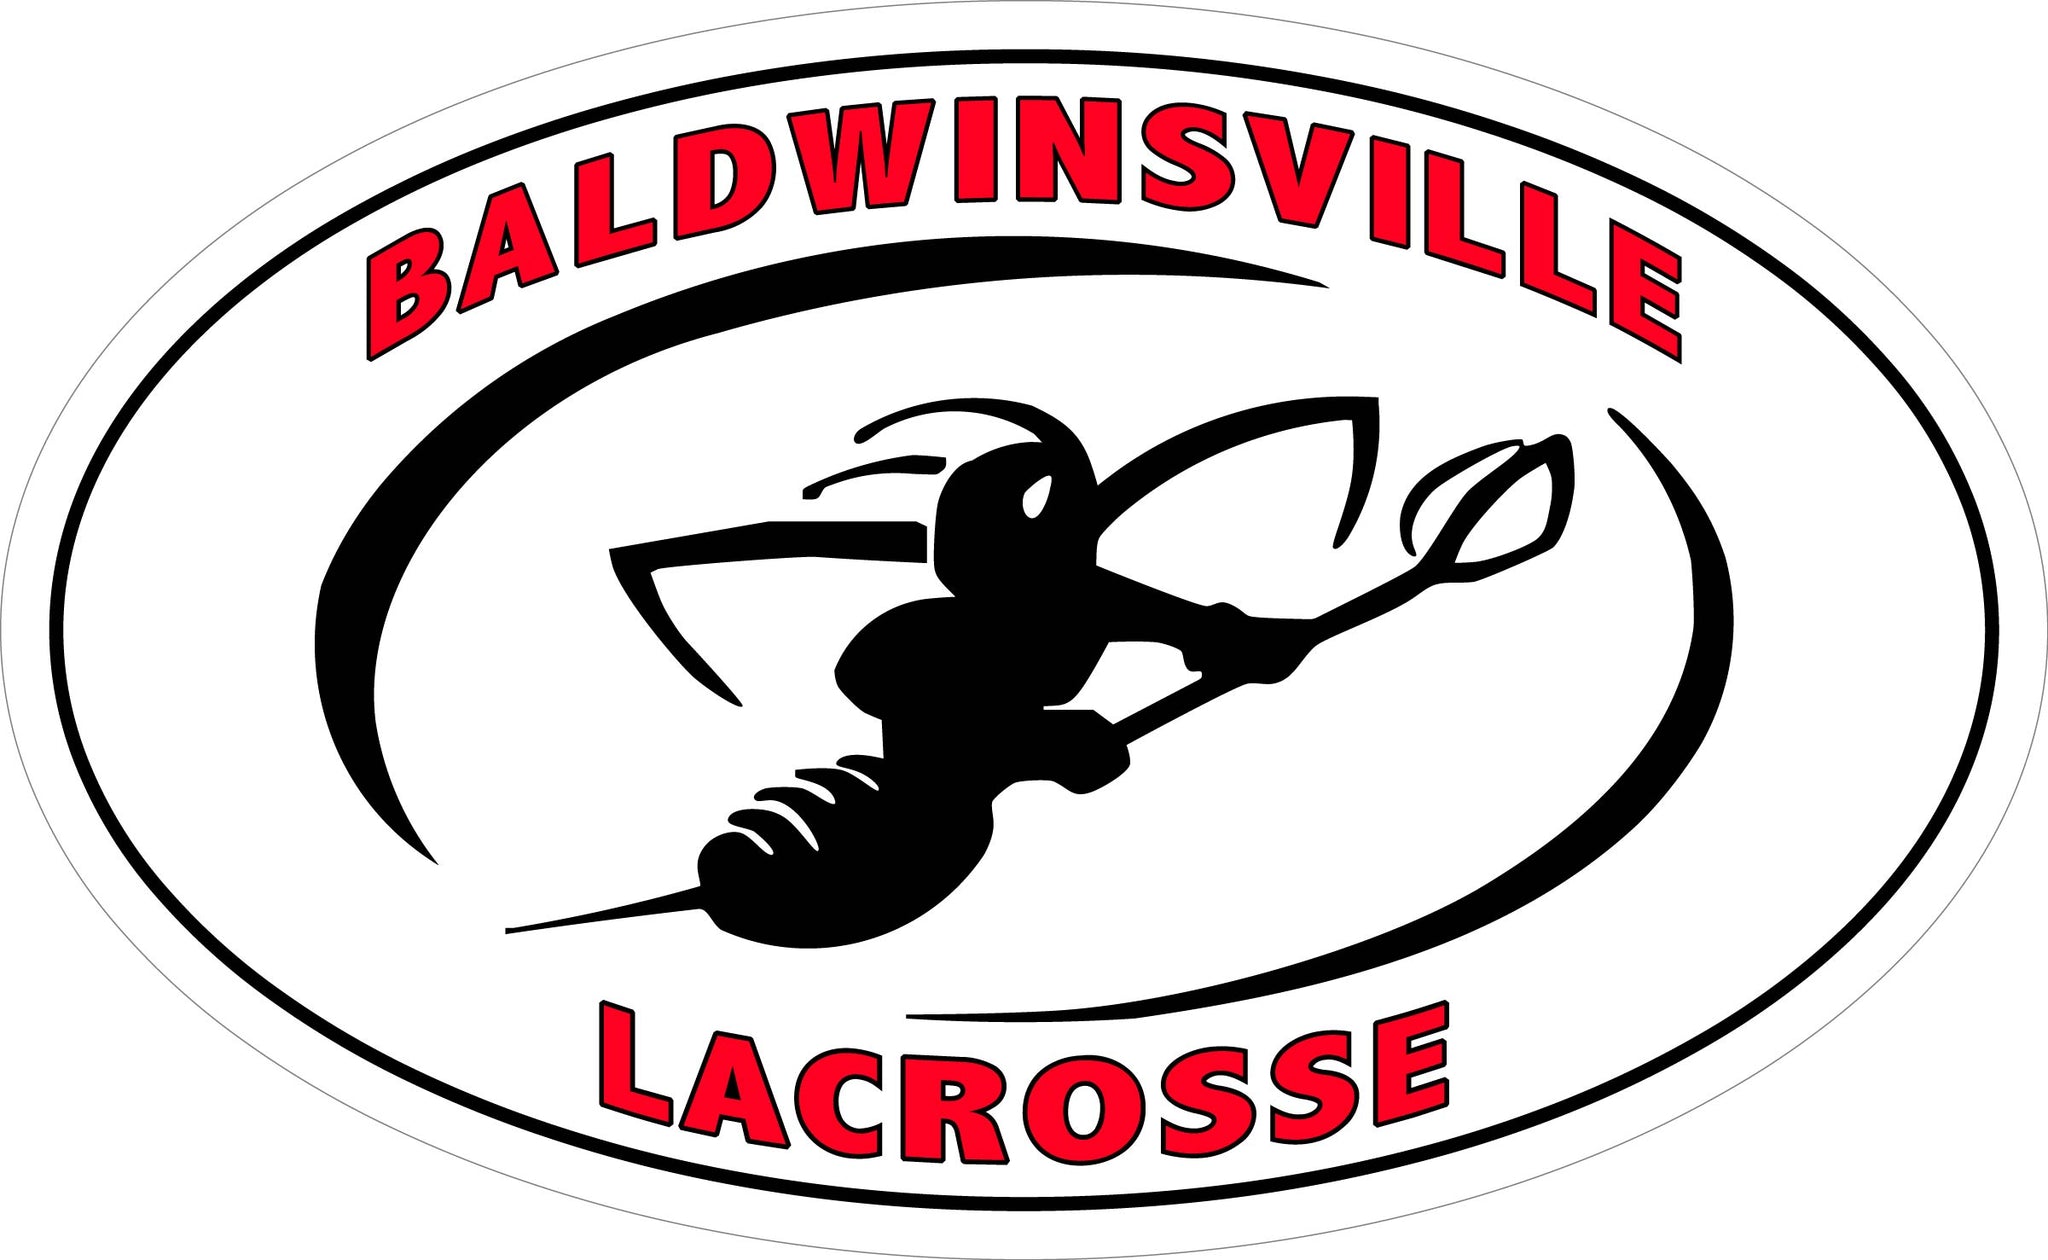 "Baldwinsville Lacrosse" Decal